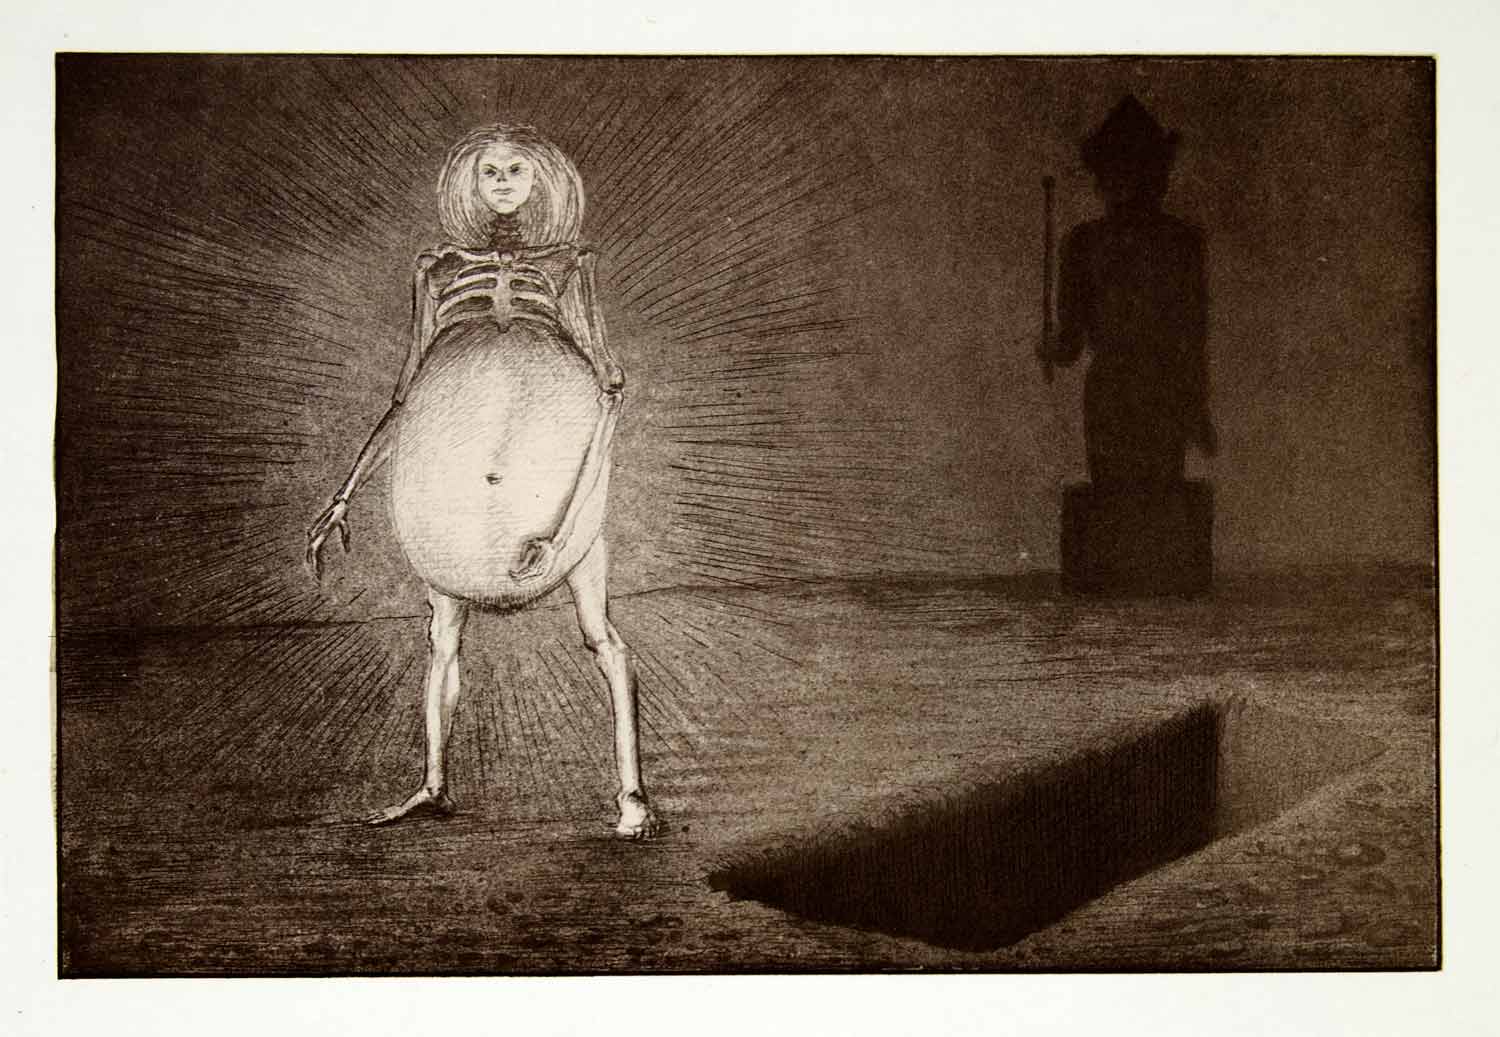 1969 Aquatone Print Alfred Kubin Nude Art Pregnant Skeleton Woman Grave XDG2